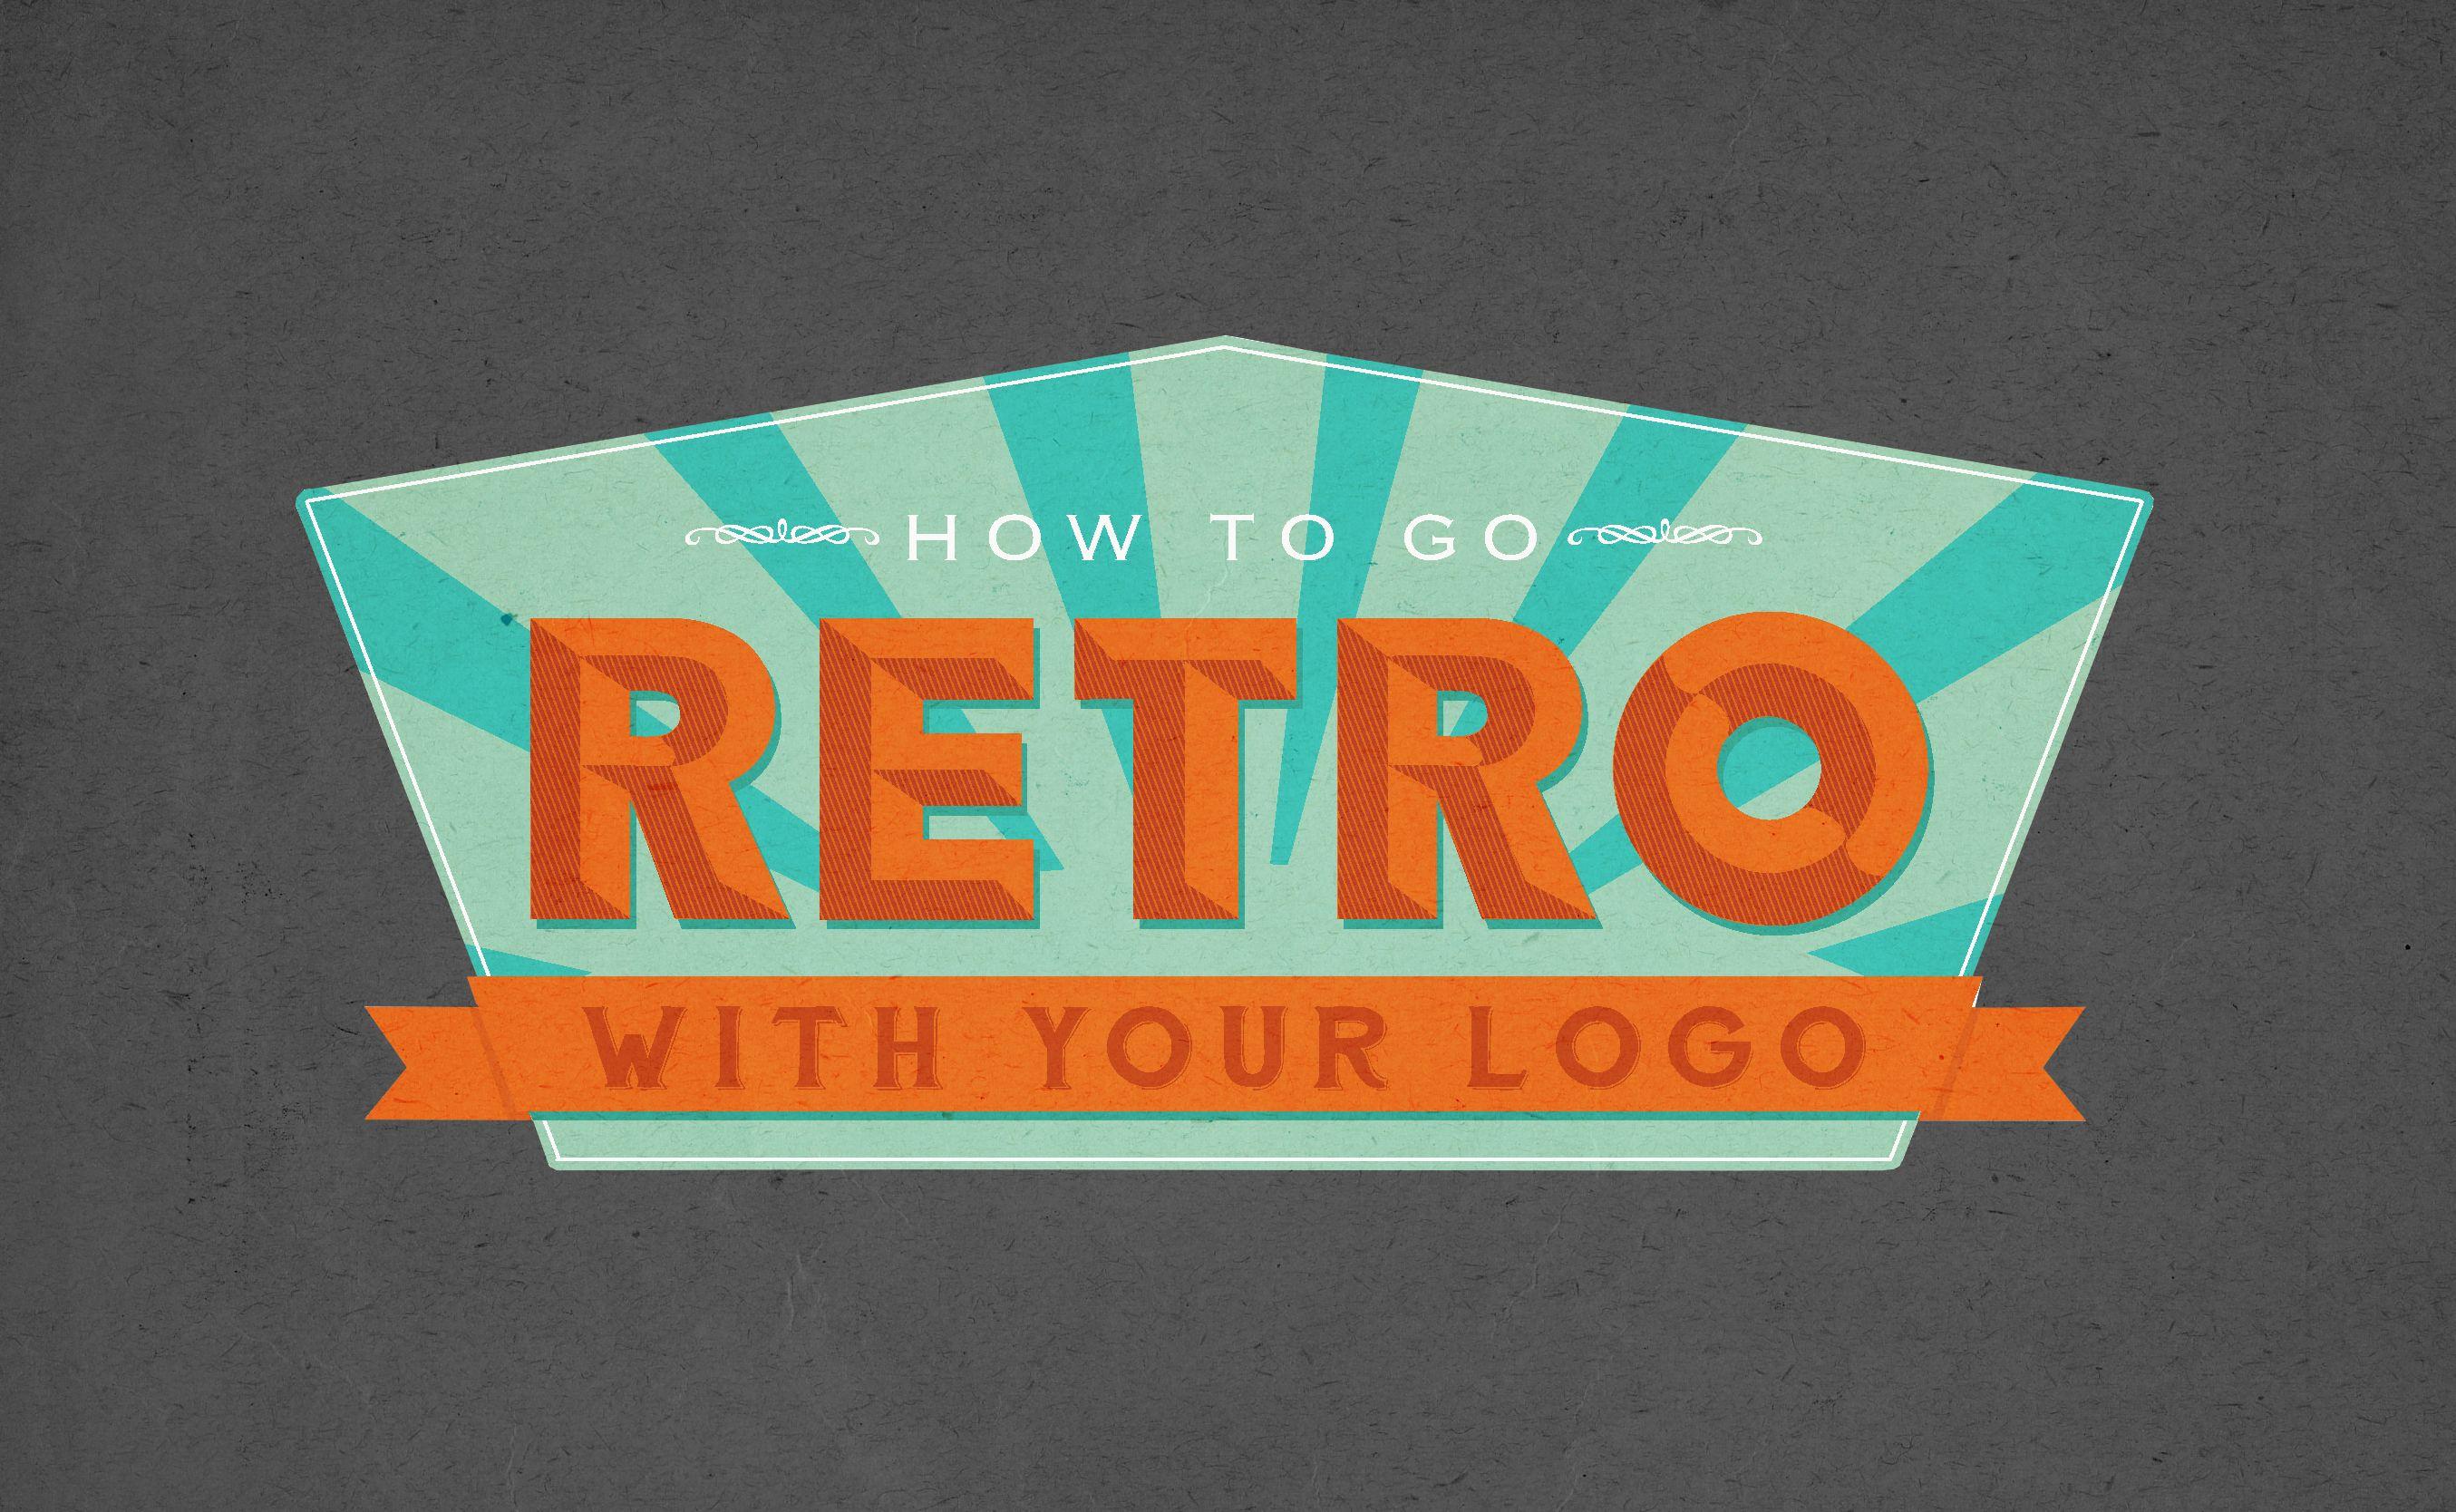 Retro Logo - Returning to retro with your logo